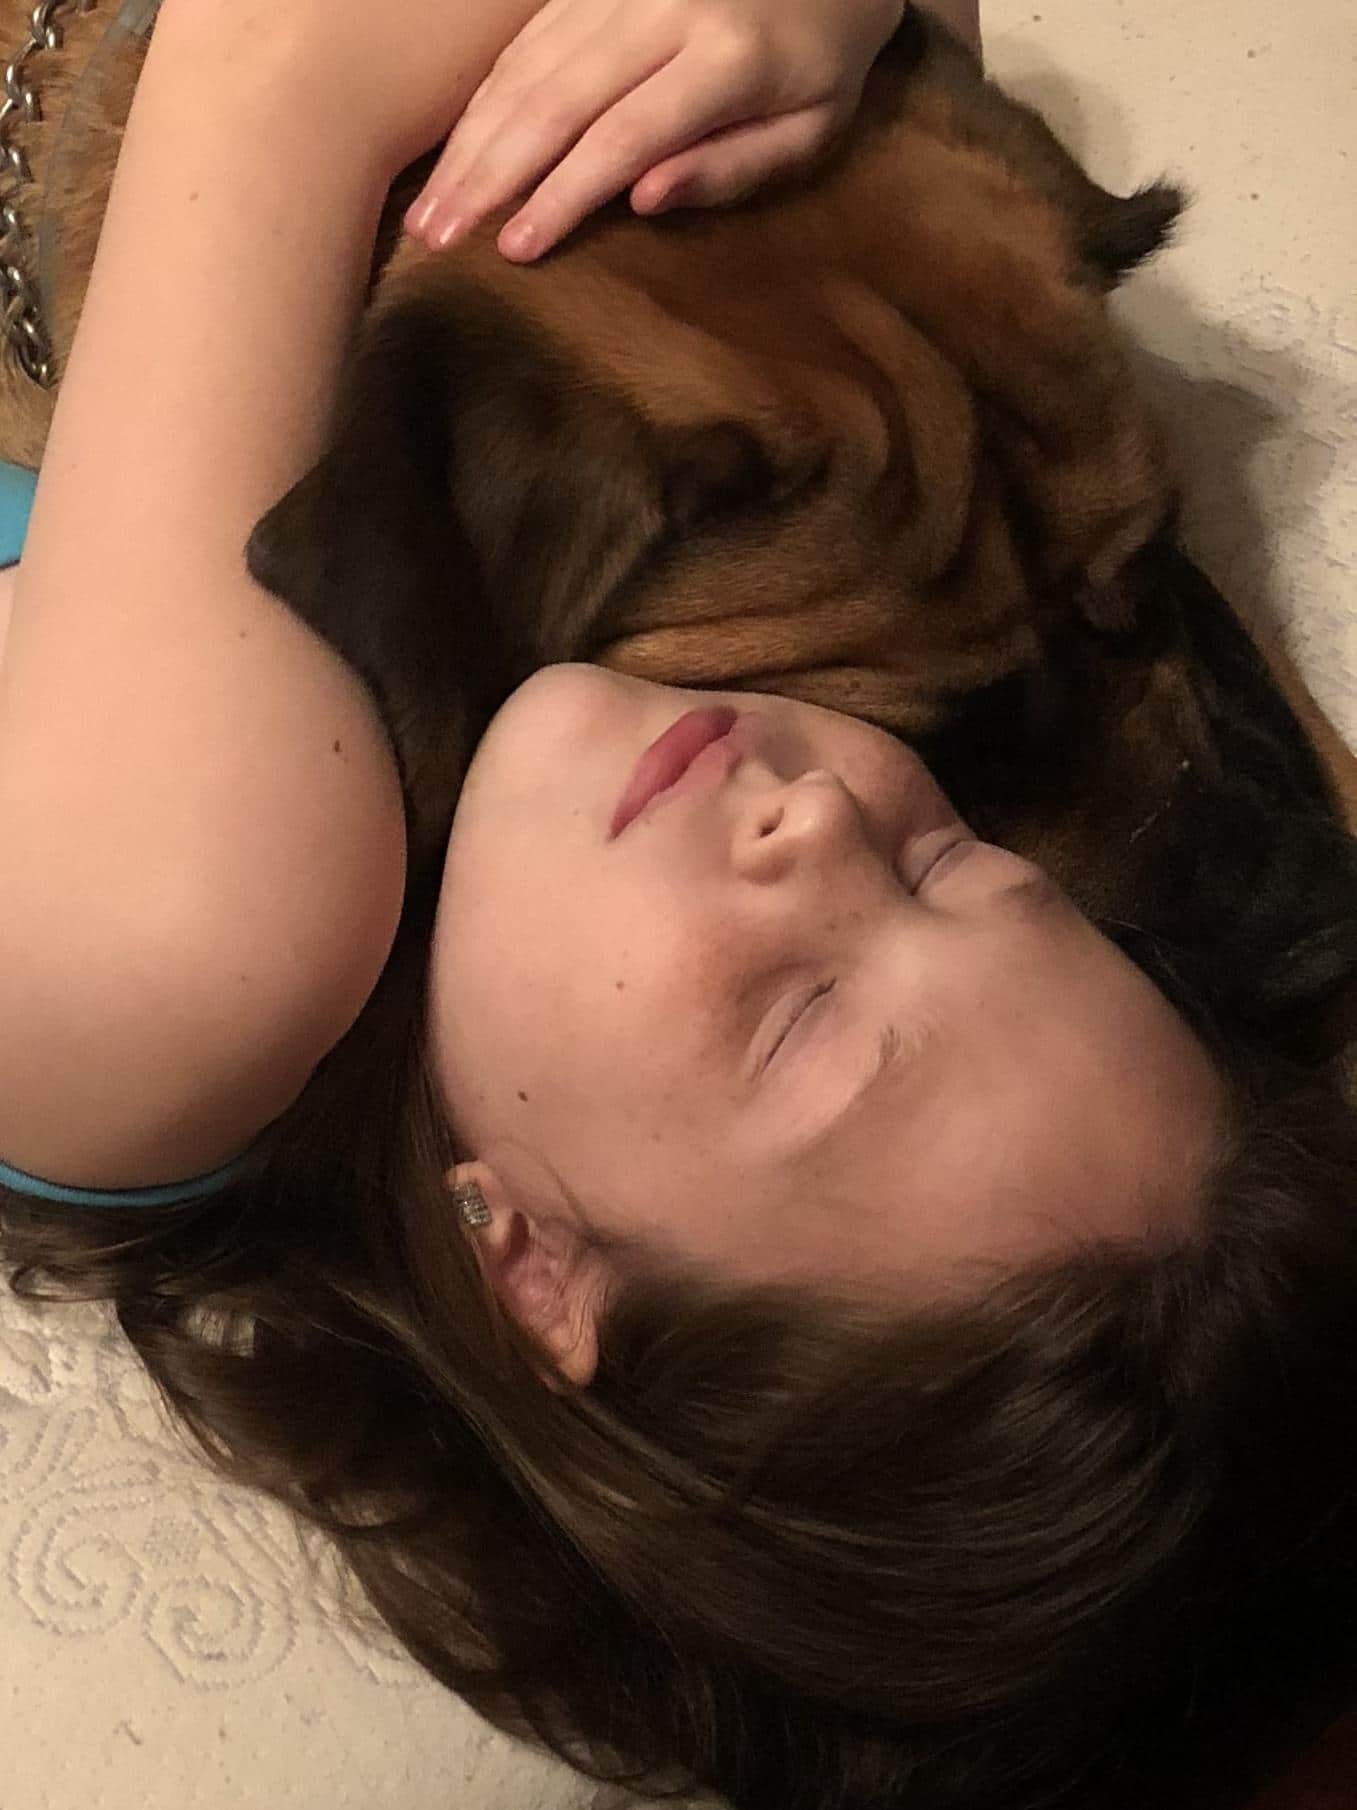 mastiff sleeping with small girl